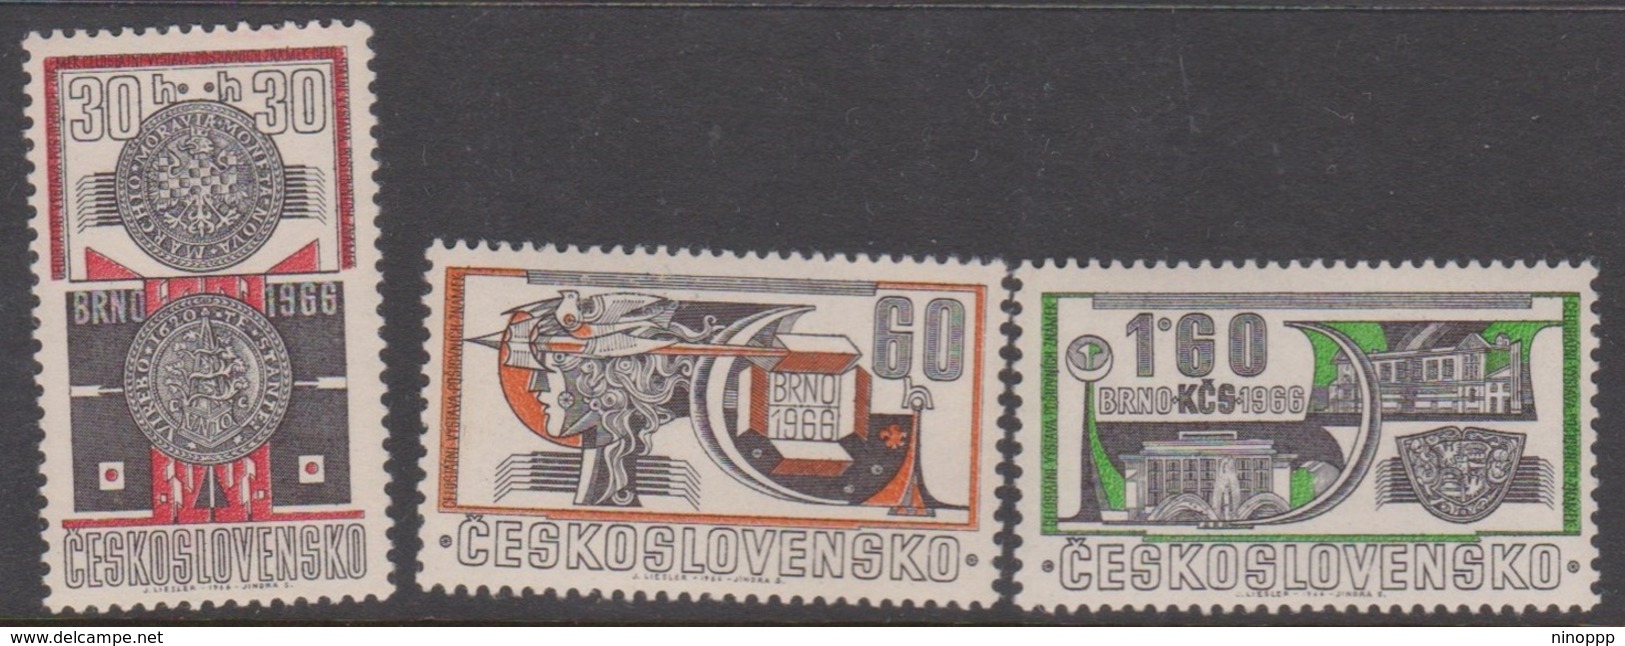 Czechoslovakia SG 1602-1604 1966 Brno Stamp Exhibition, Mint Never Hinged - Neufs